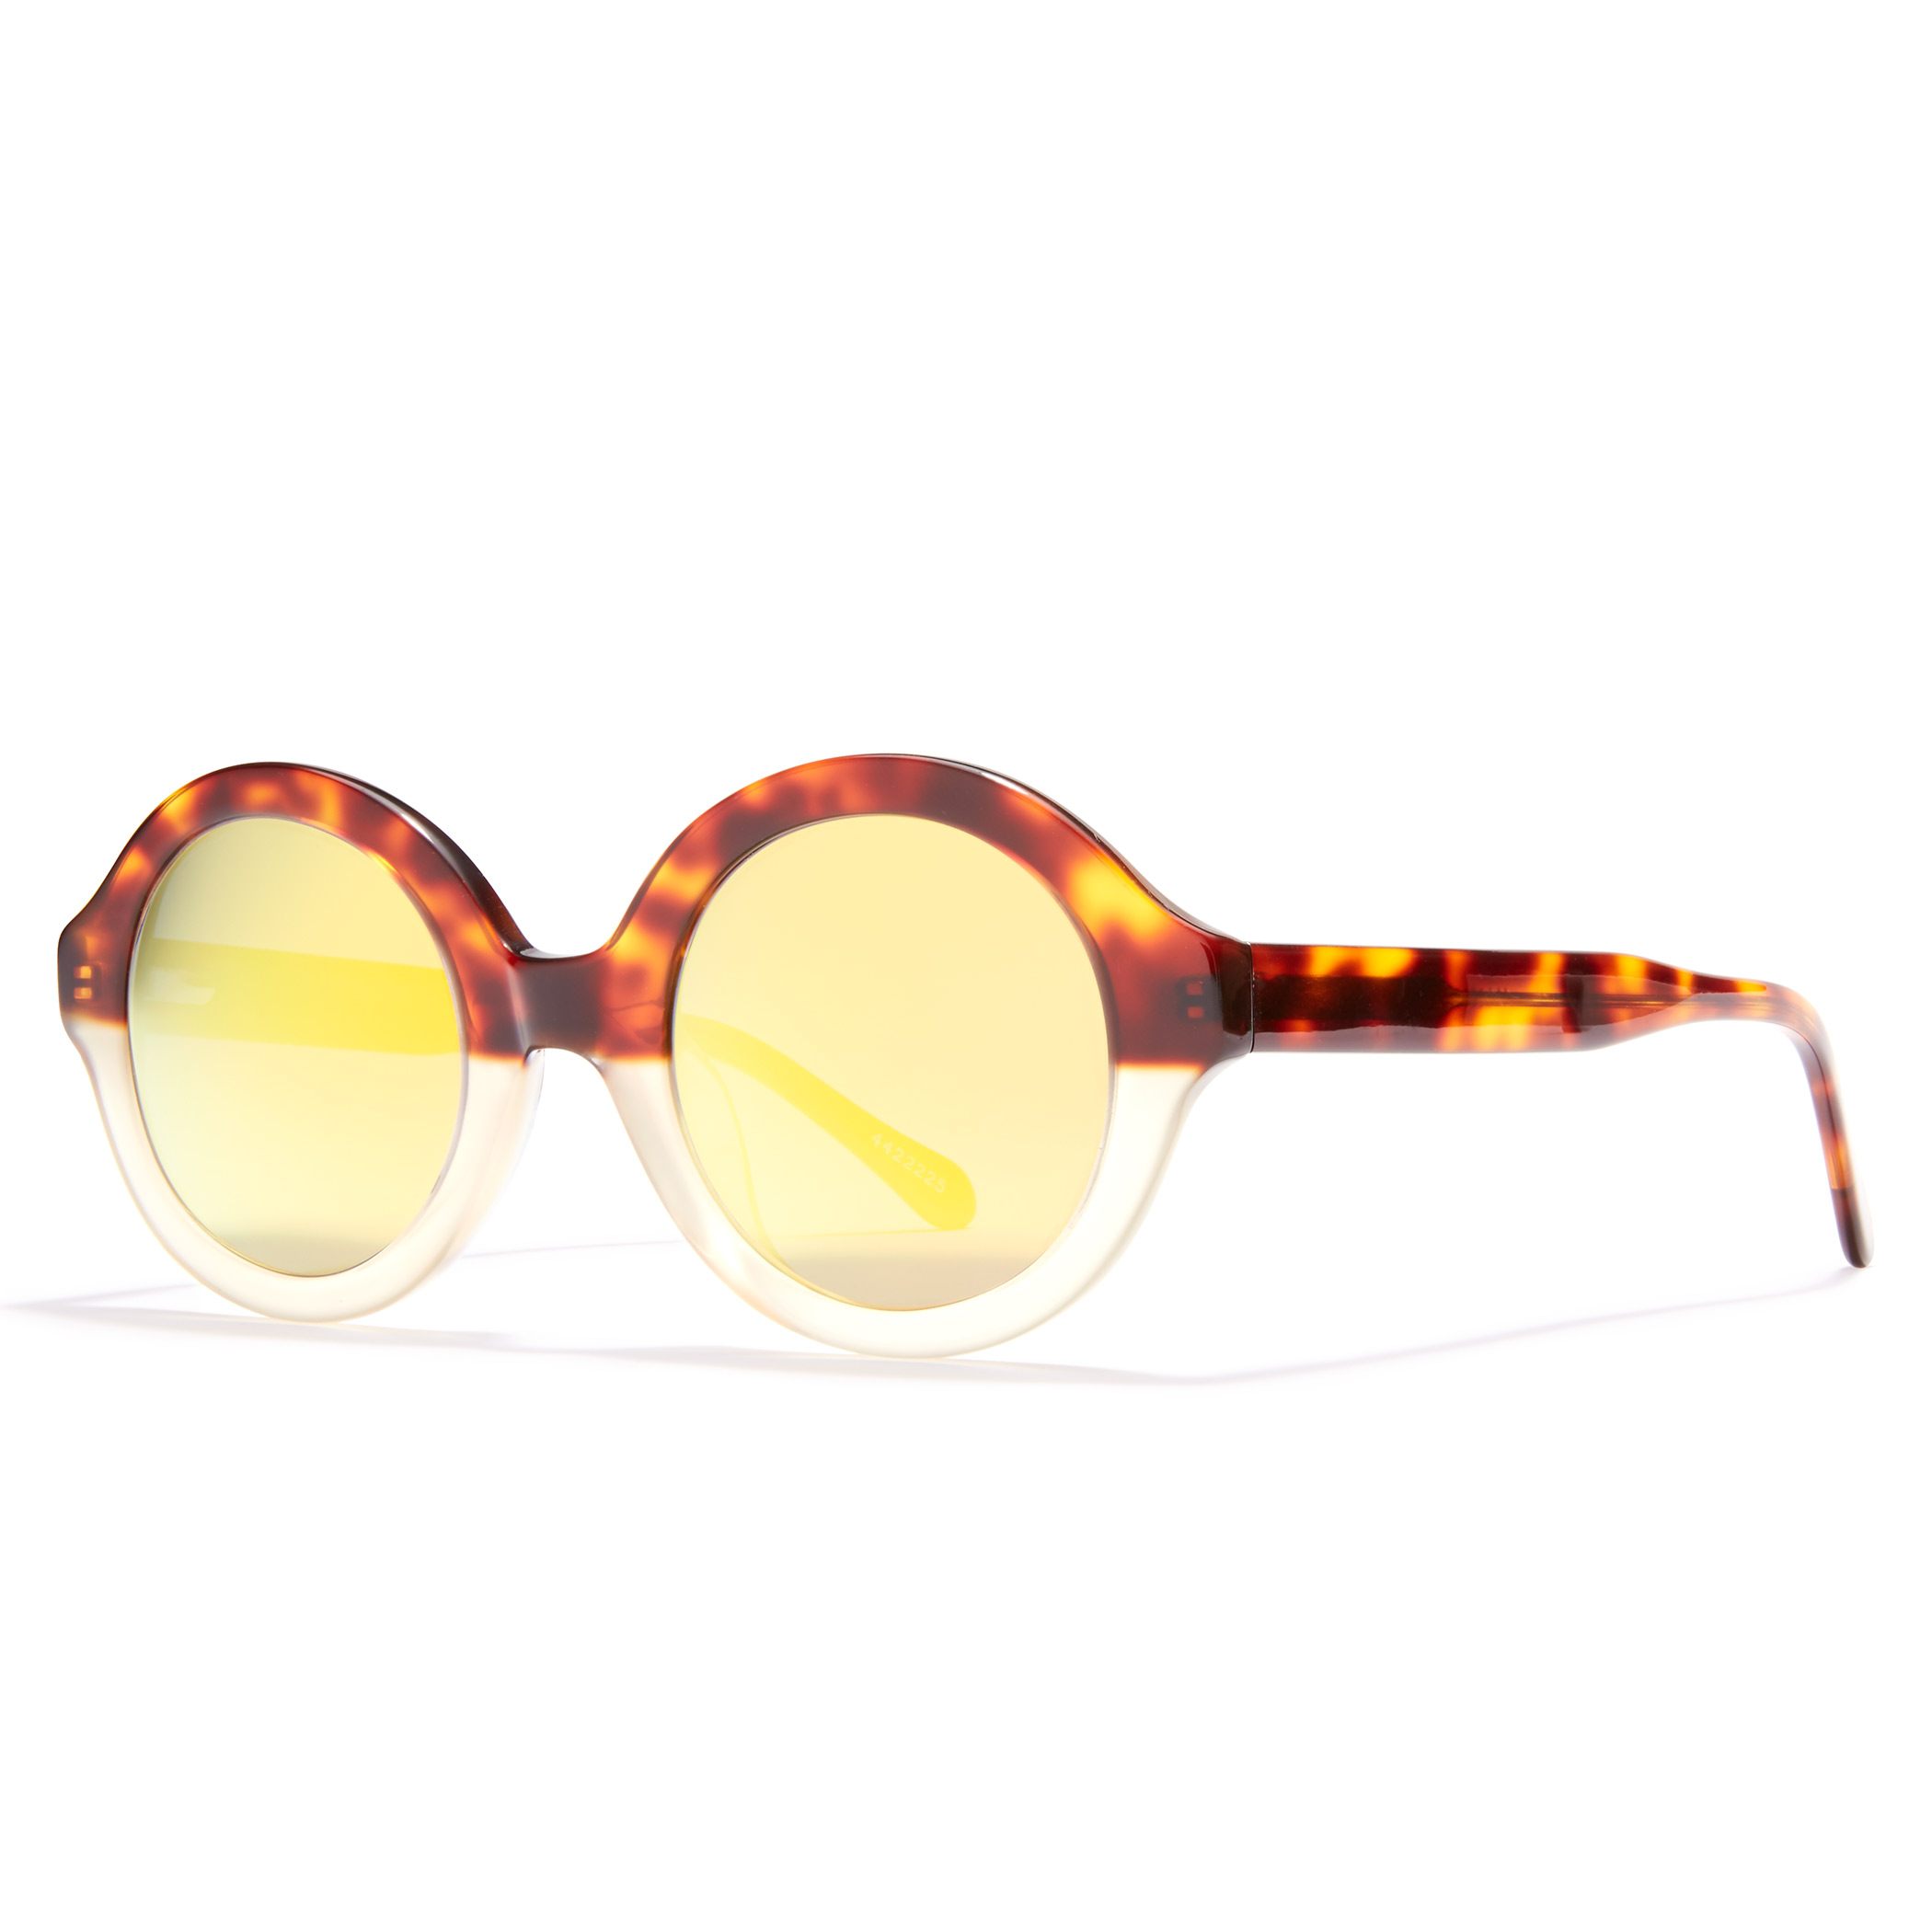 Glasses as a Fashion Statement Zenni Optical Canada Blog